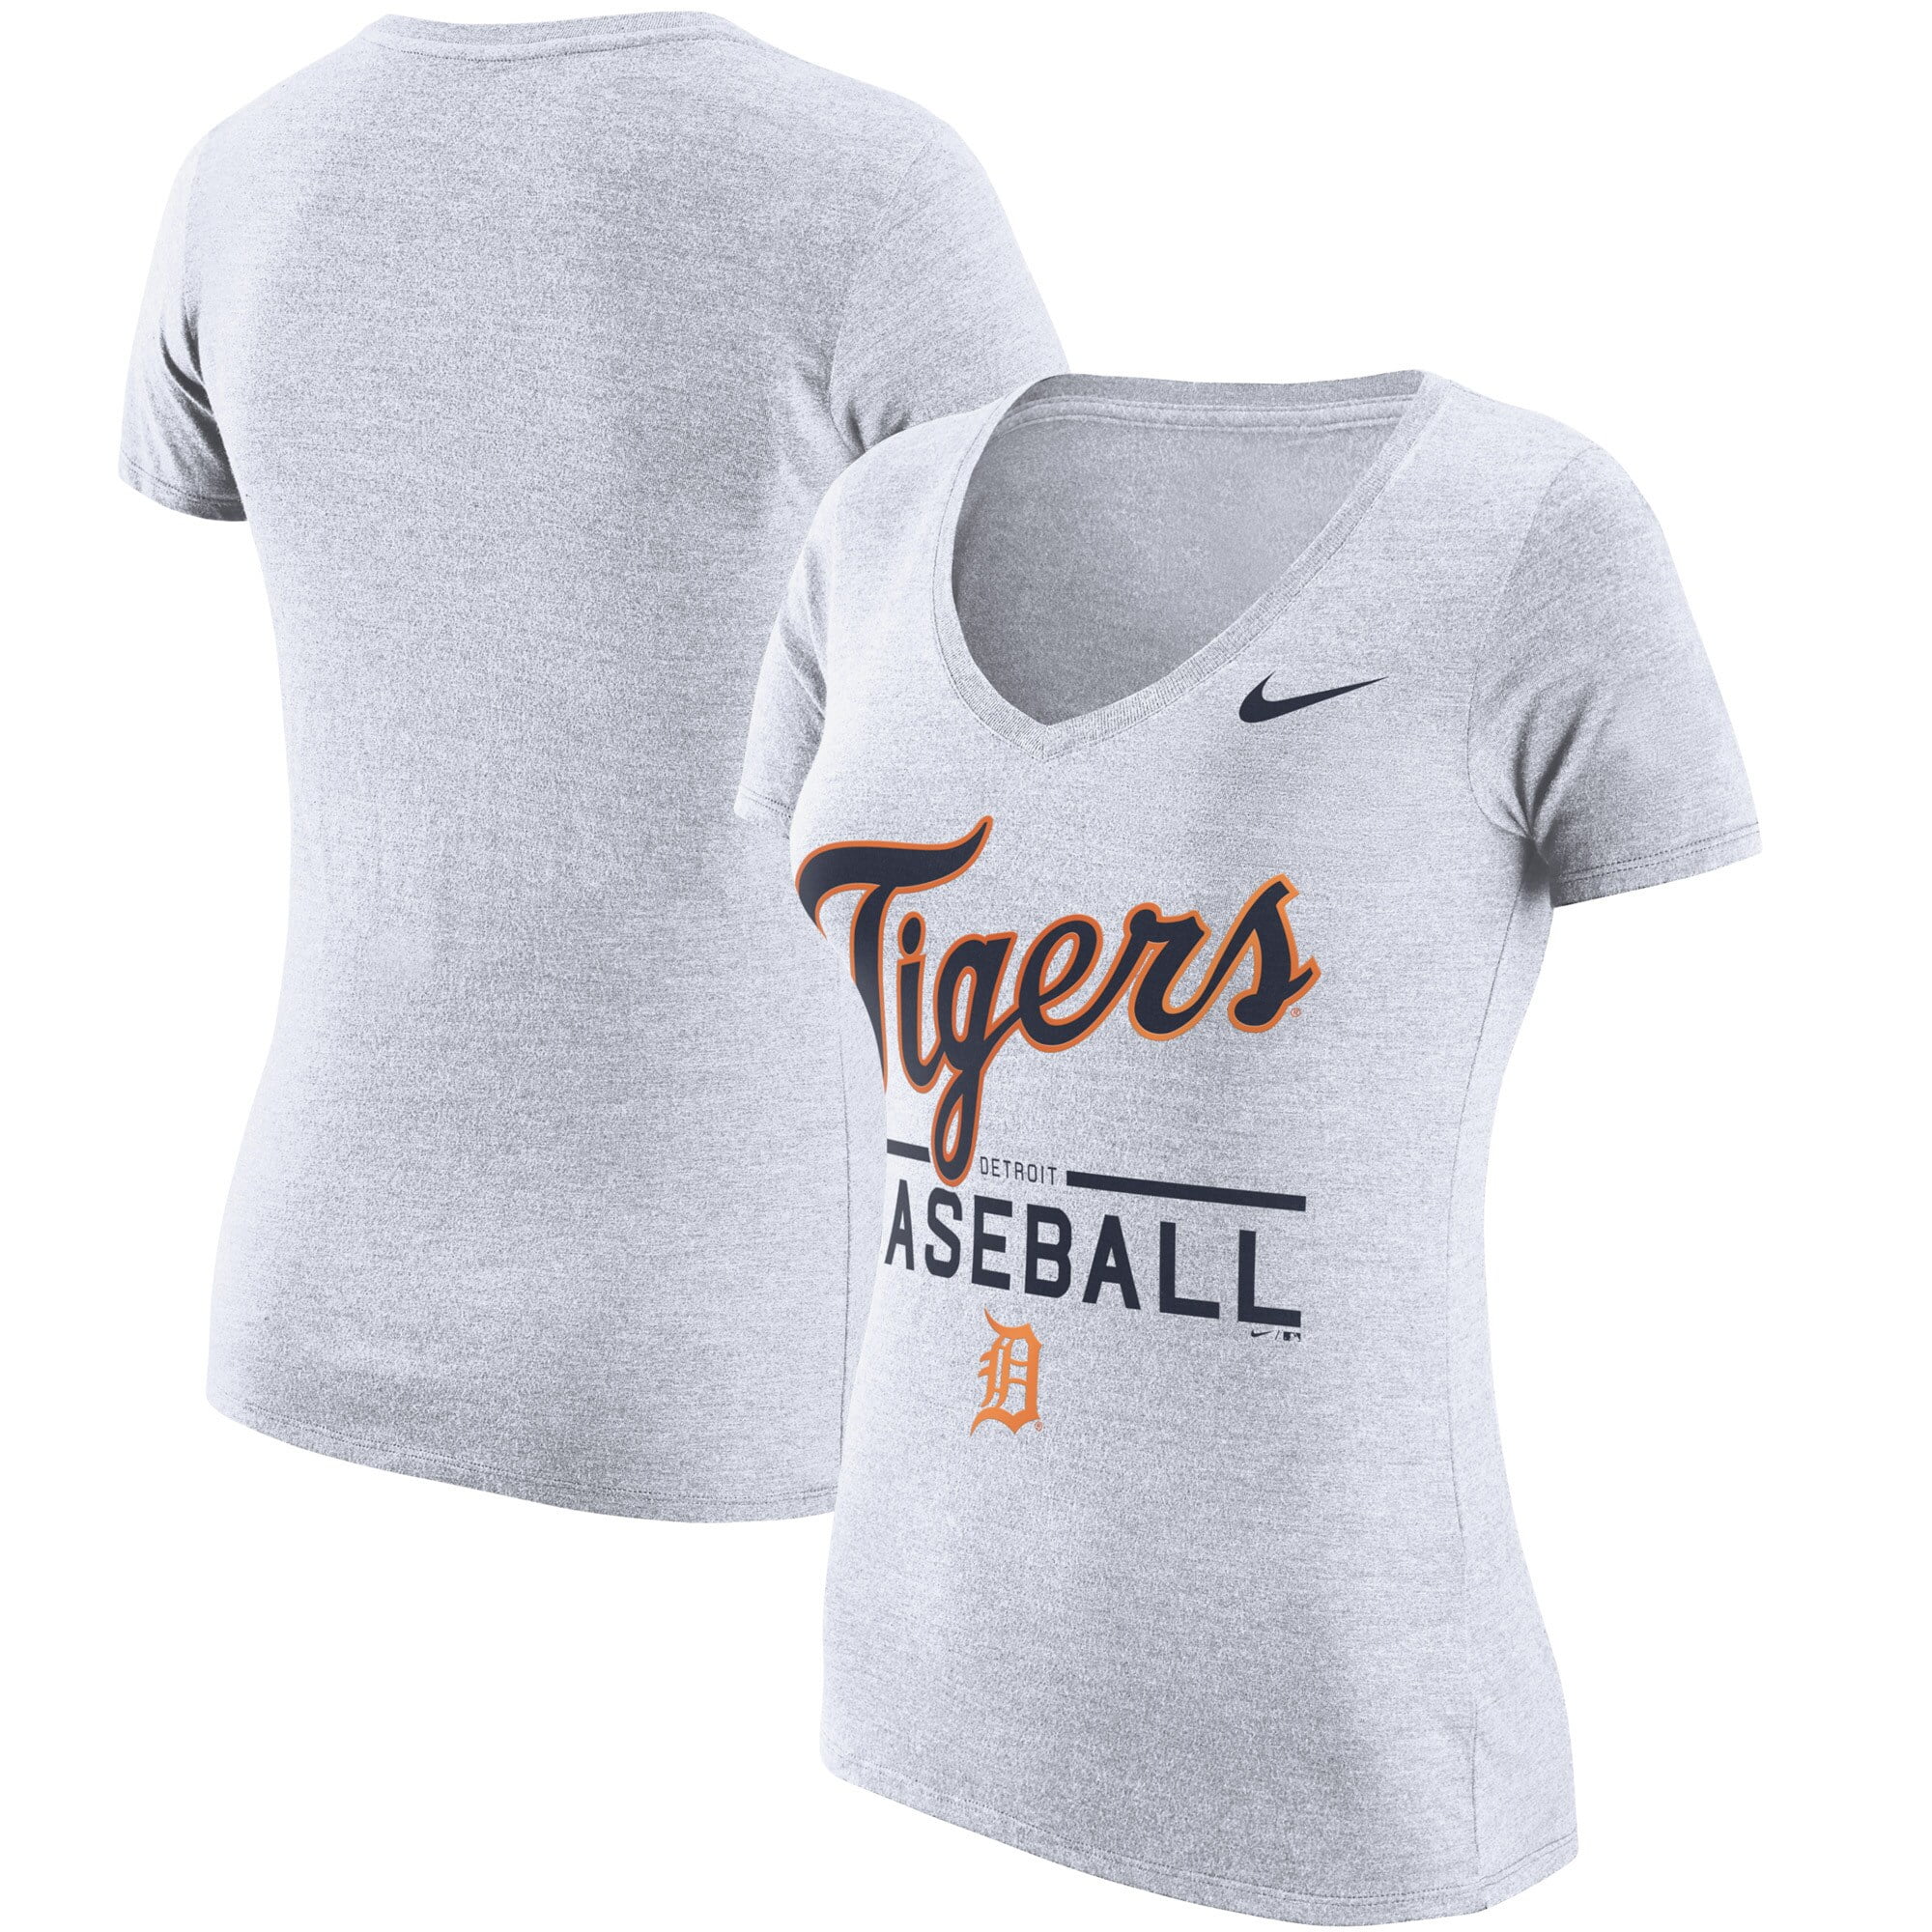 women's nike detroit tigers shirts